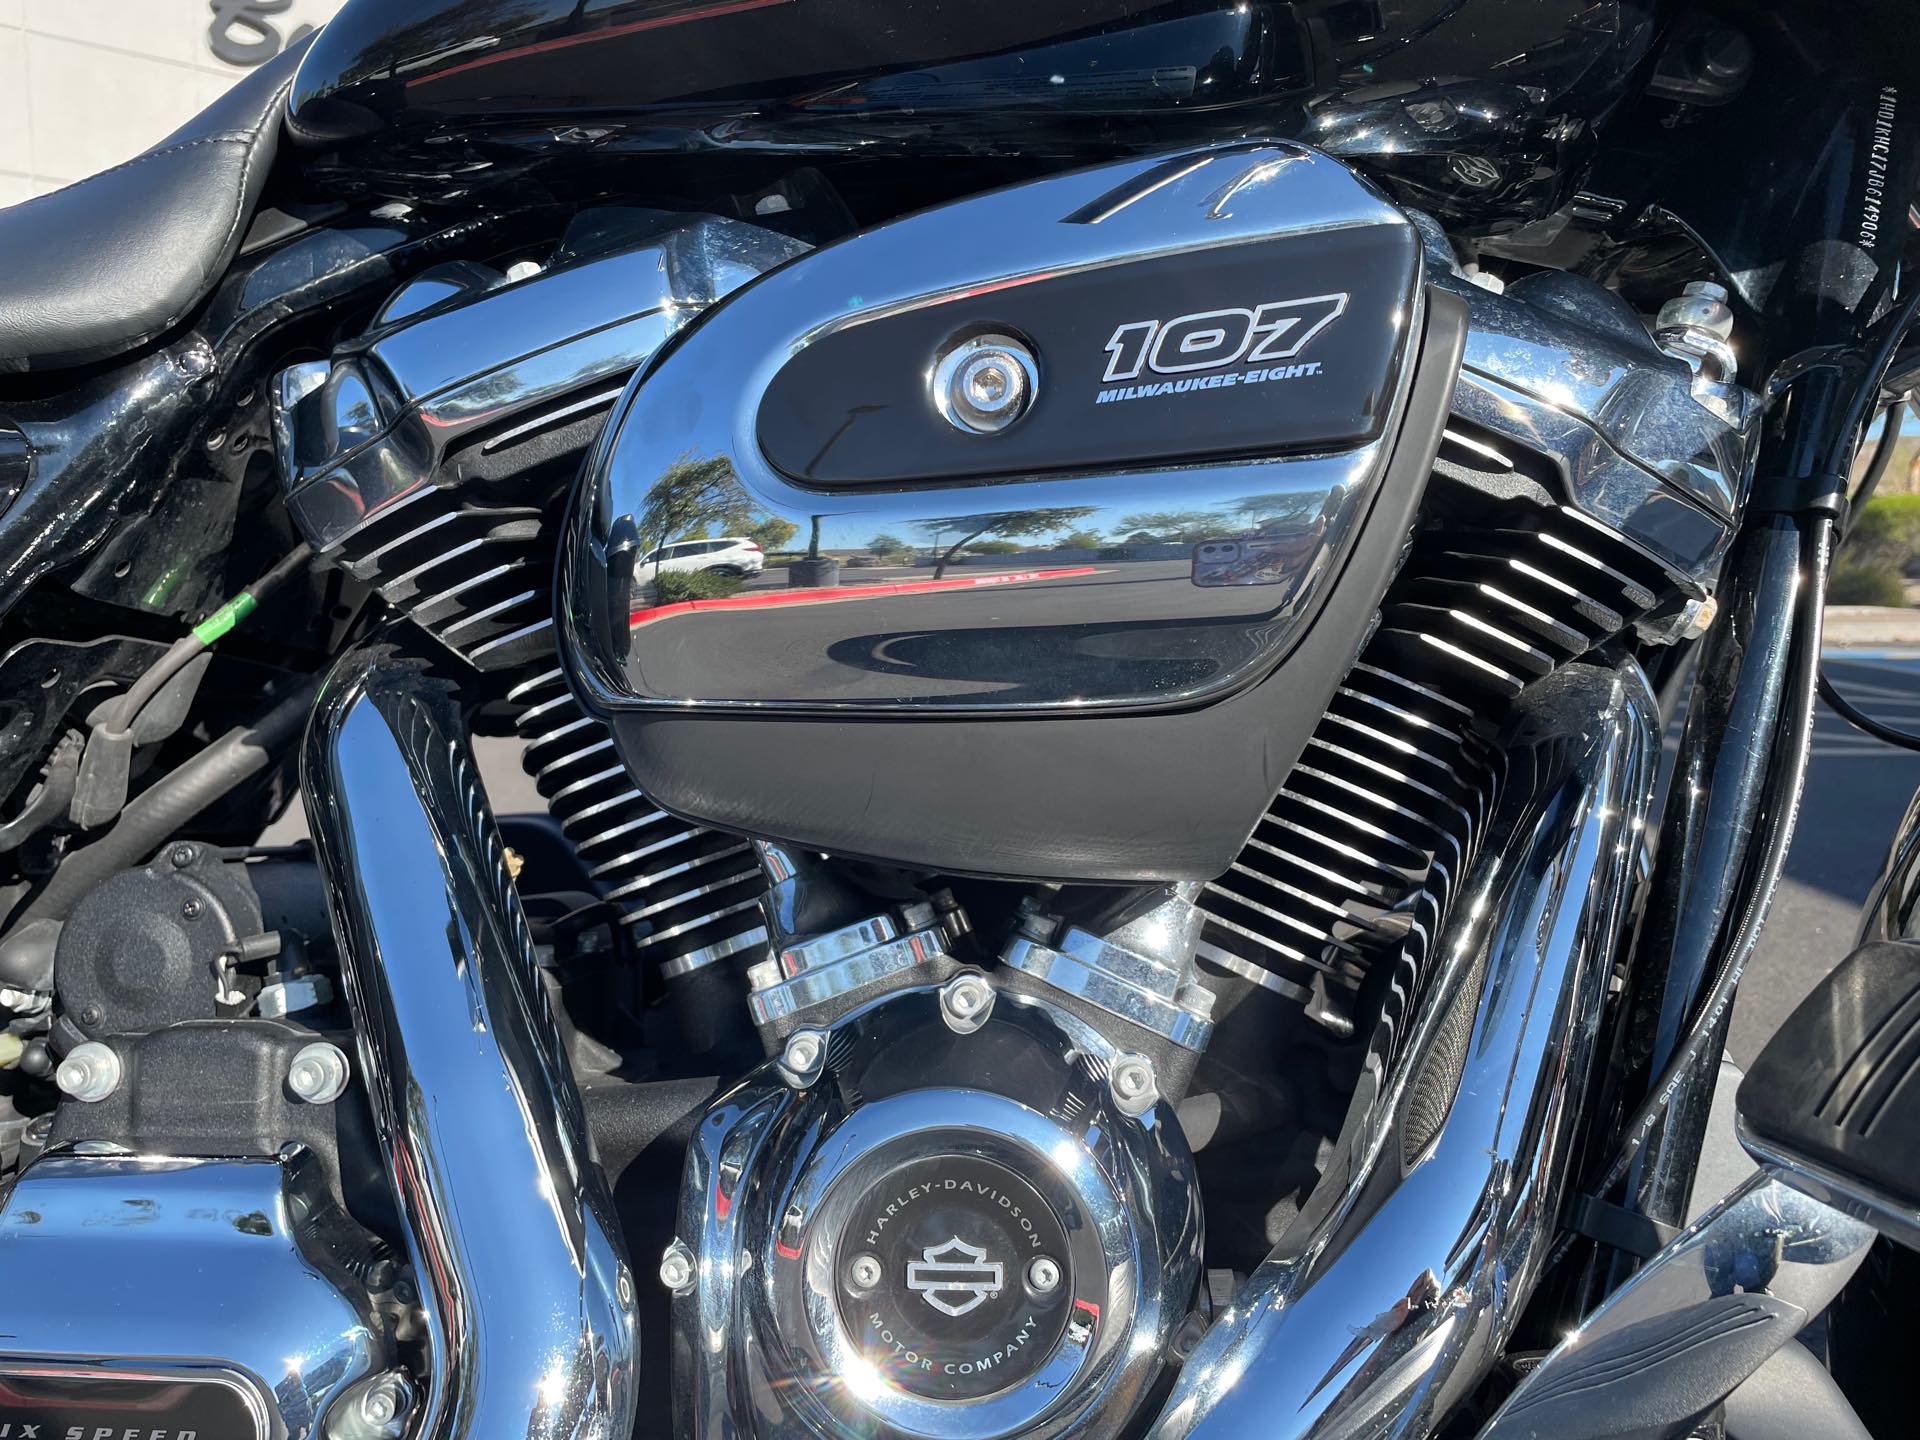 2018 Harley-Davidson Road Glide Base at Buddy Stubbs Arizona Harley-Davidson